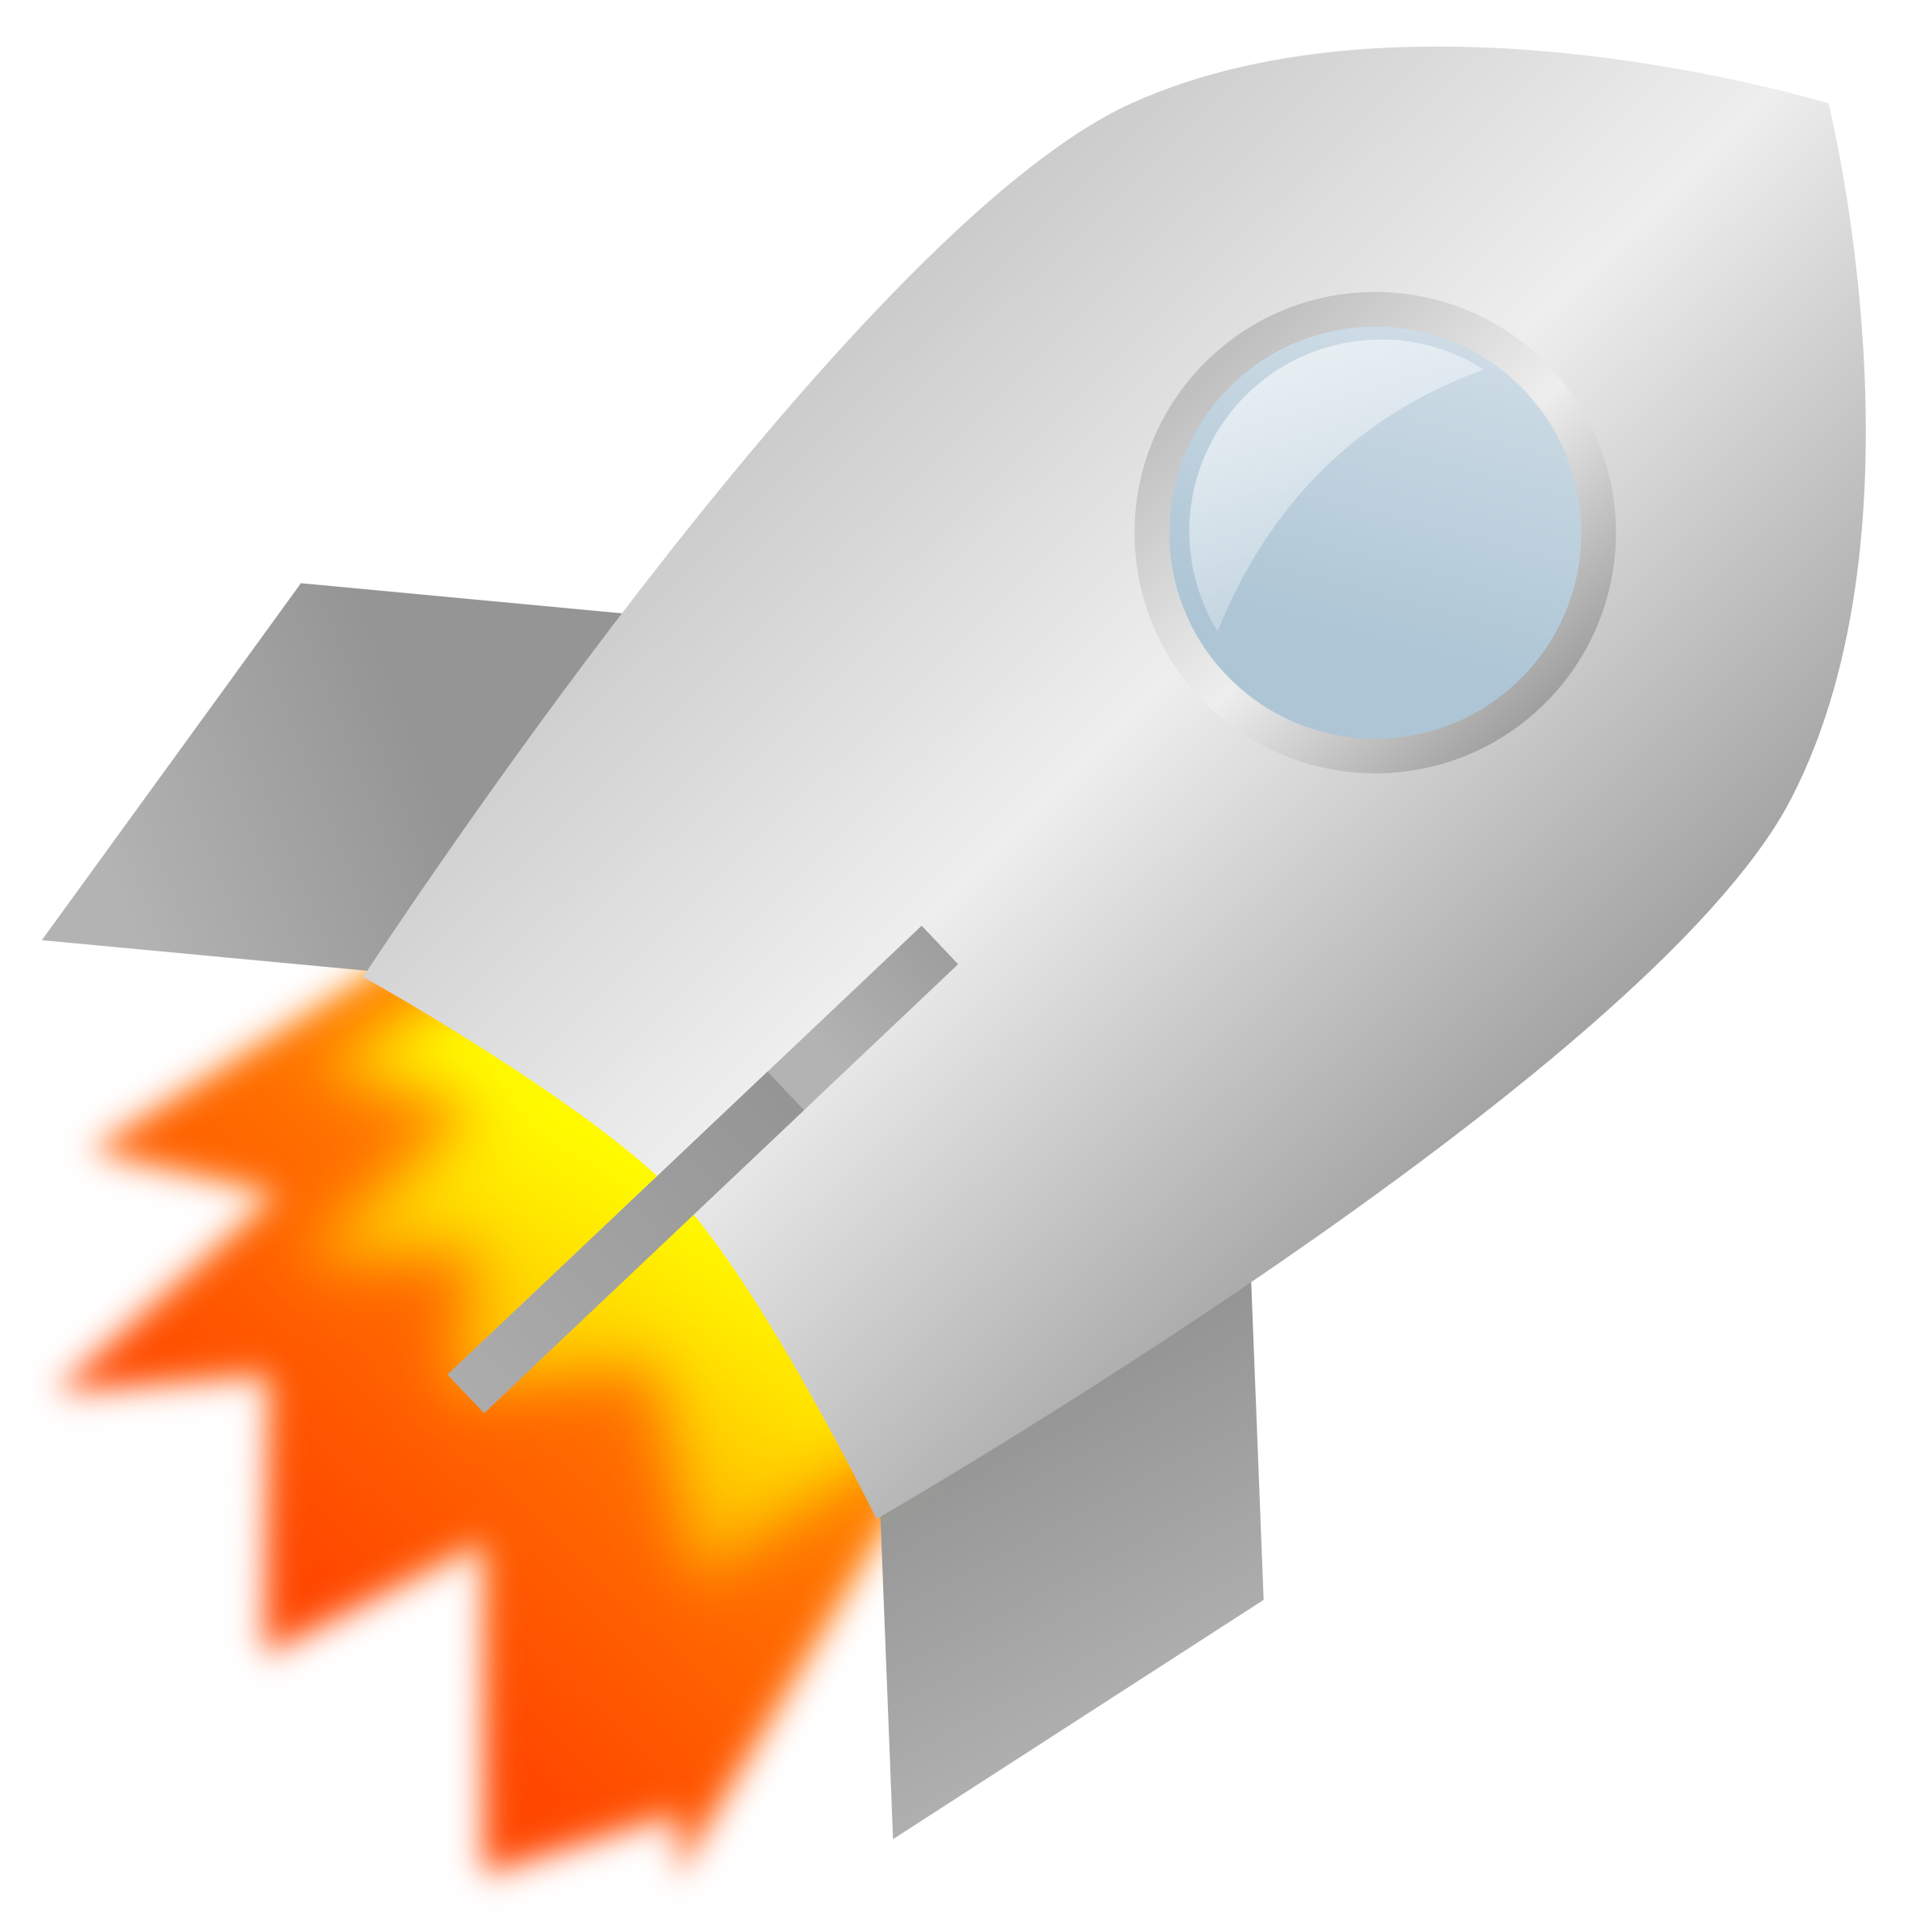 spaceship clipart rocket booster